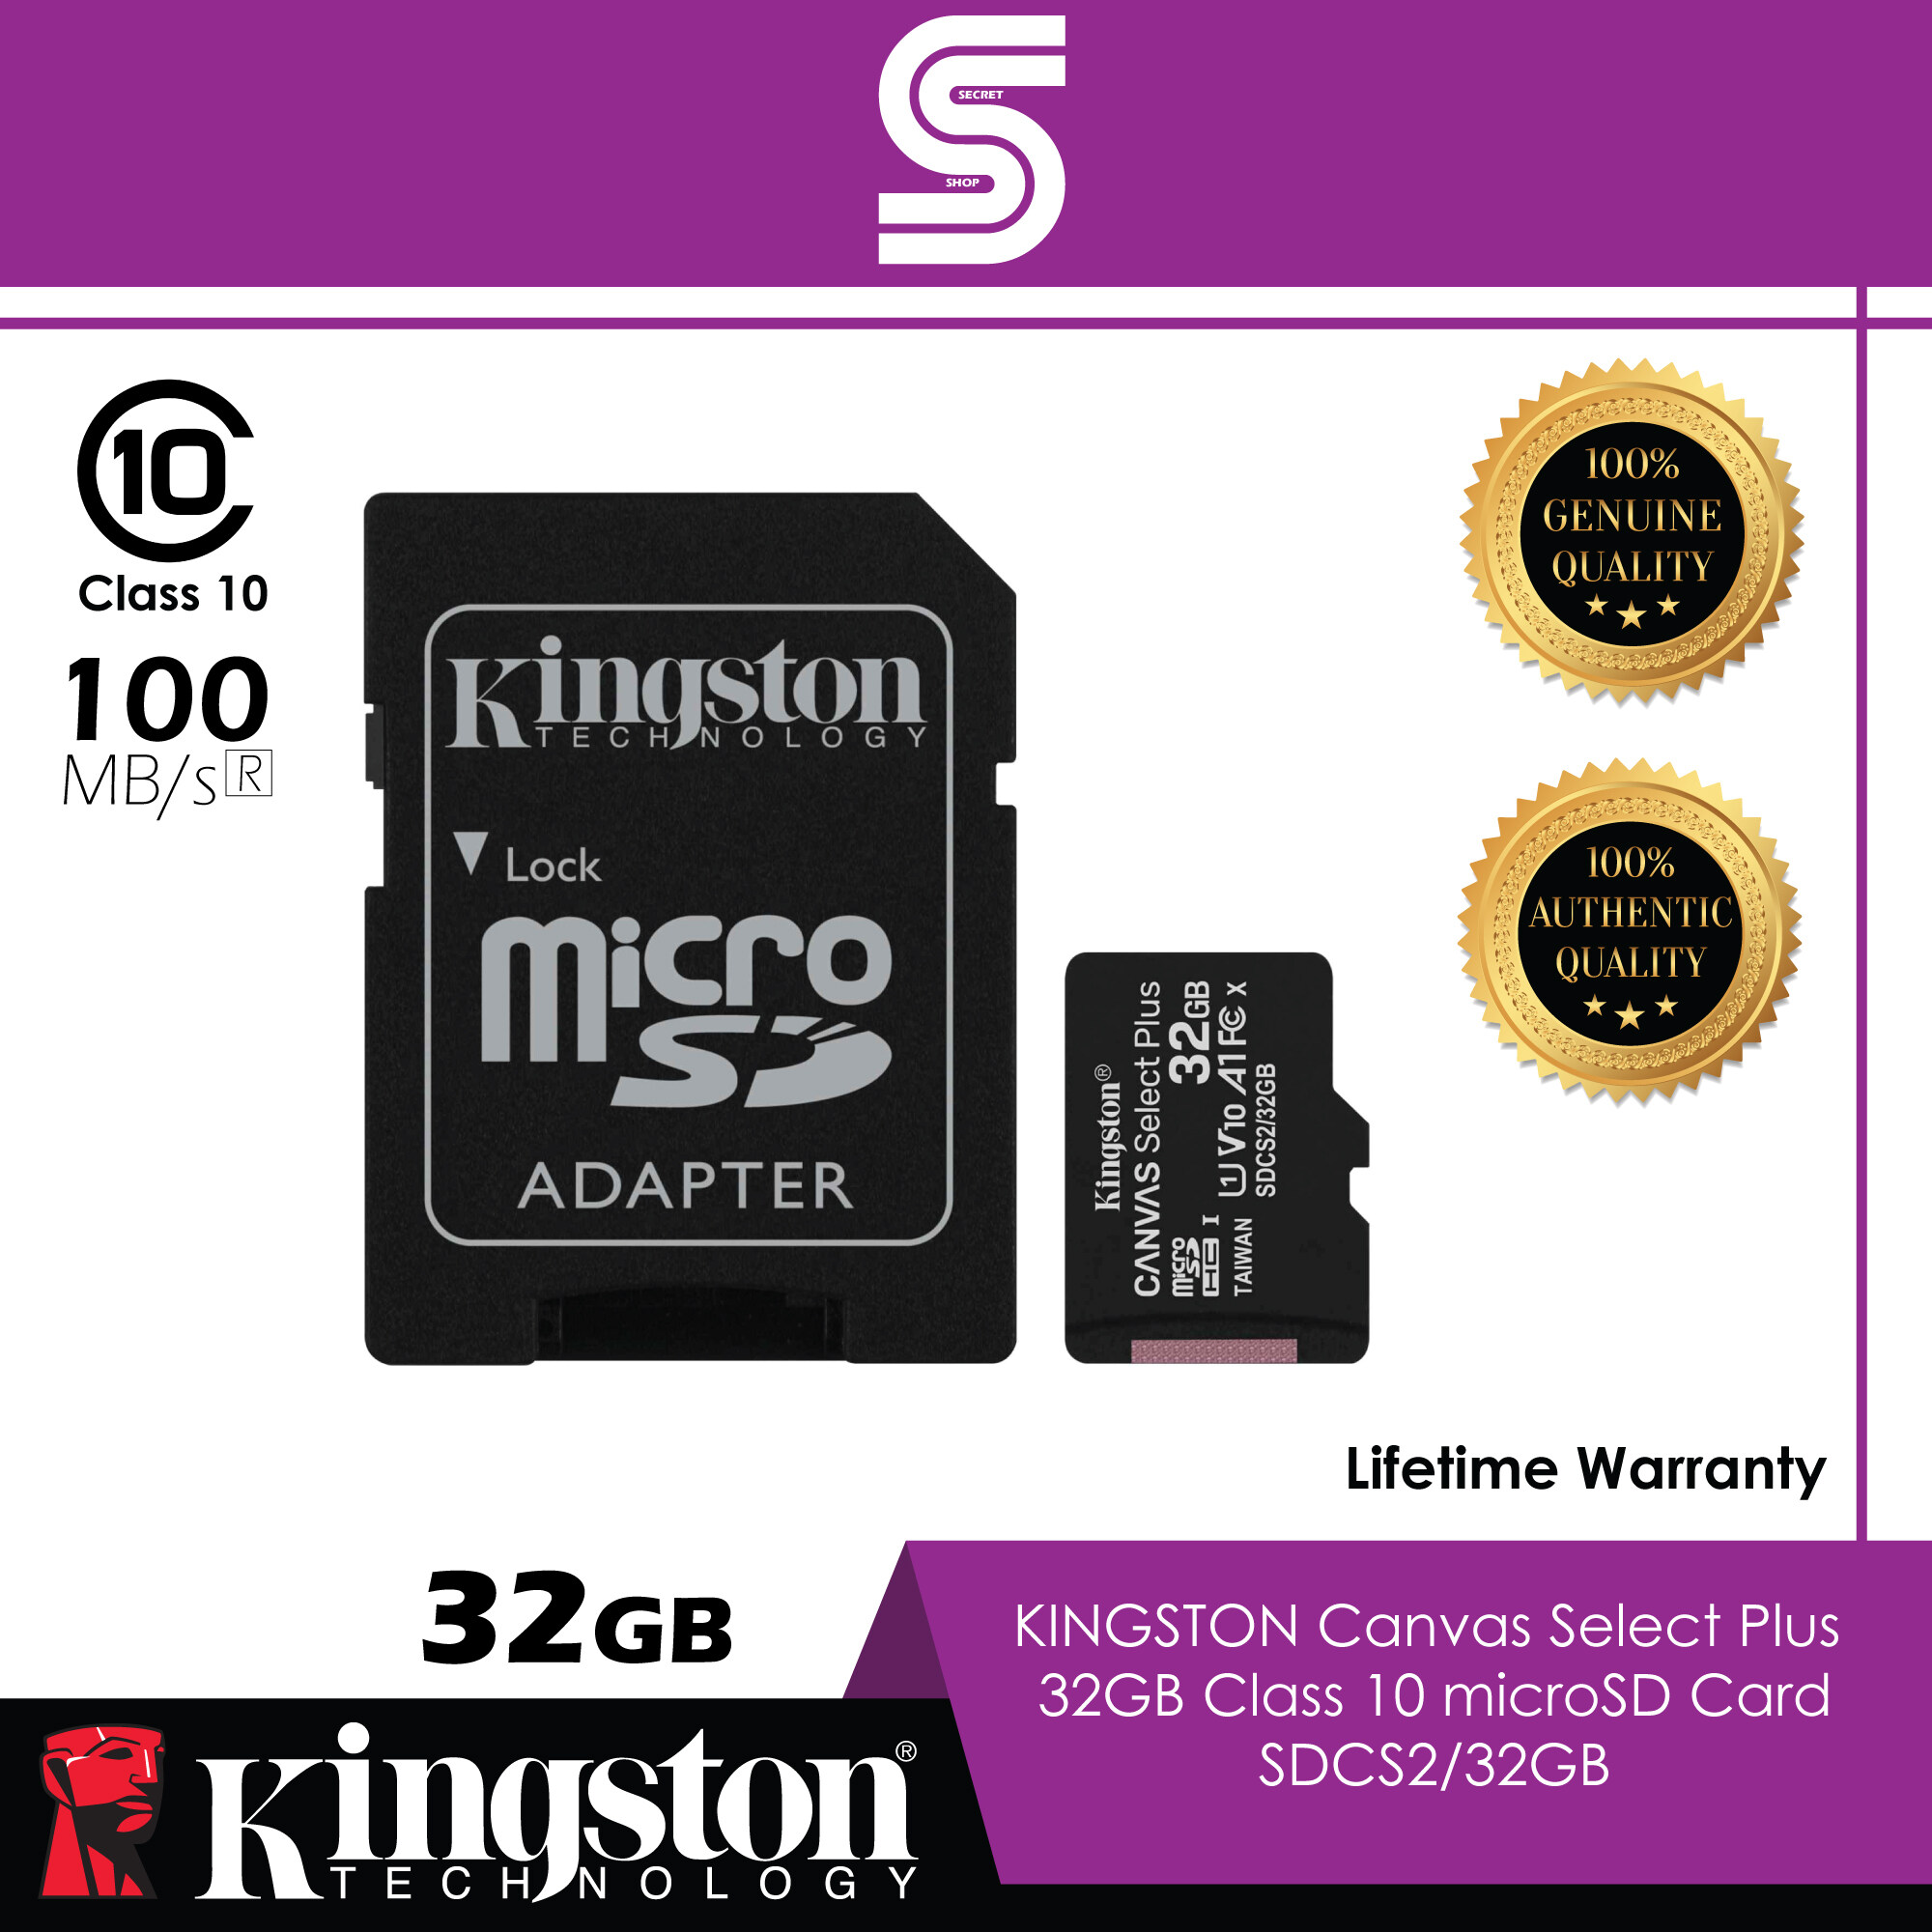 Kingston Canvas Select Plus 32GB Class 10 microSD Card - SDCS2/32GB